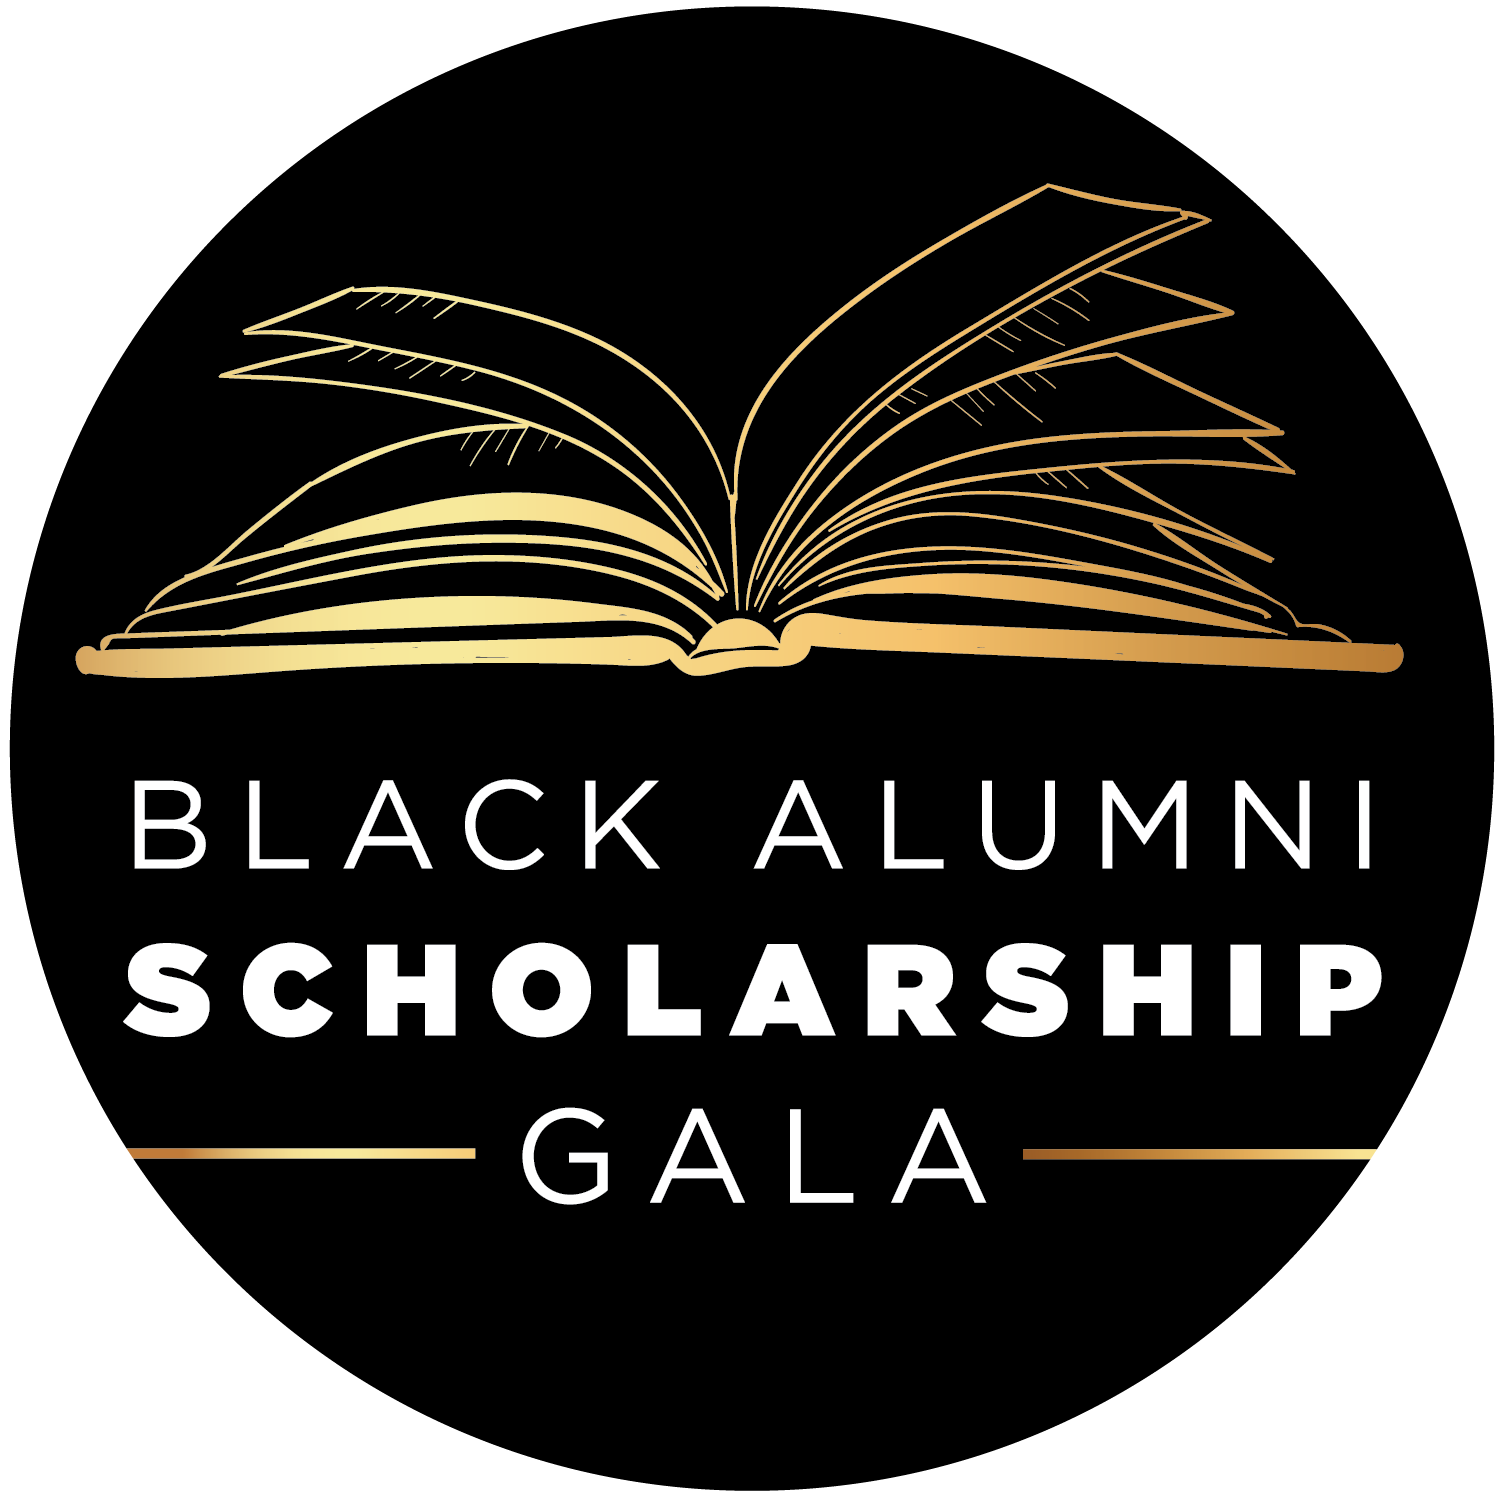 Logo for the Black Alumni Scholarship Gala showing a stylize